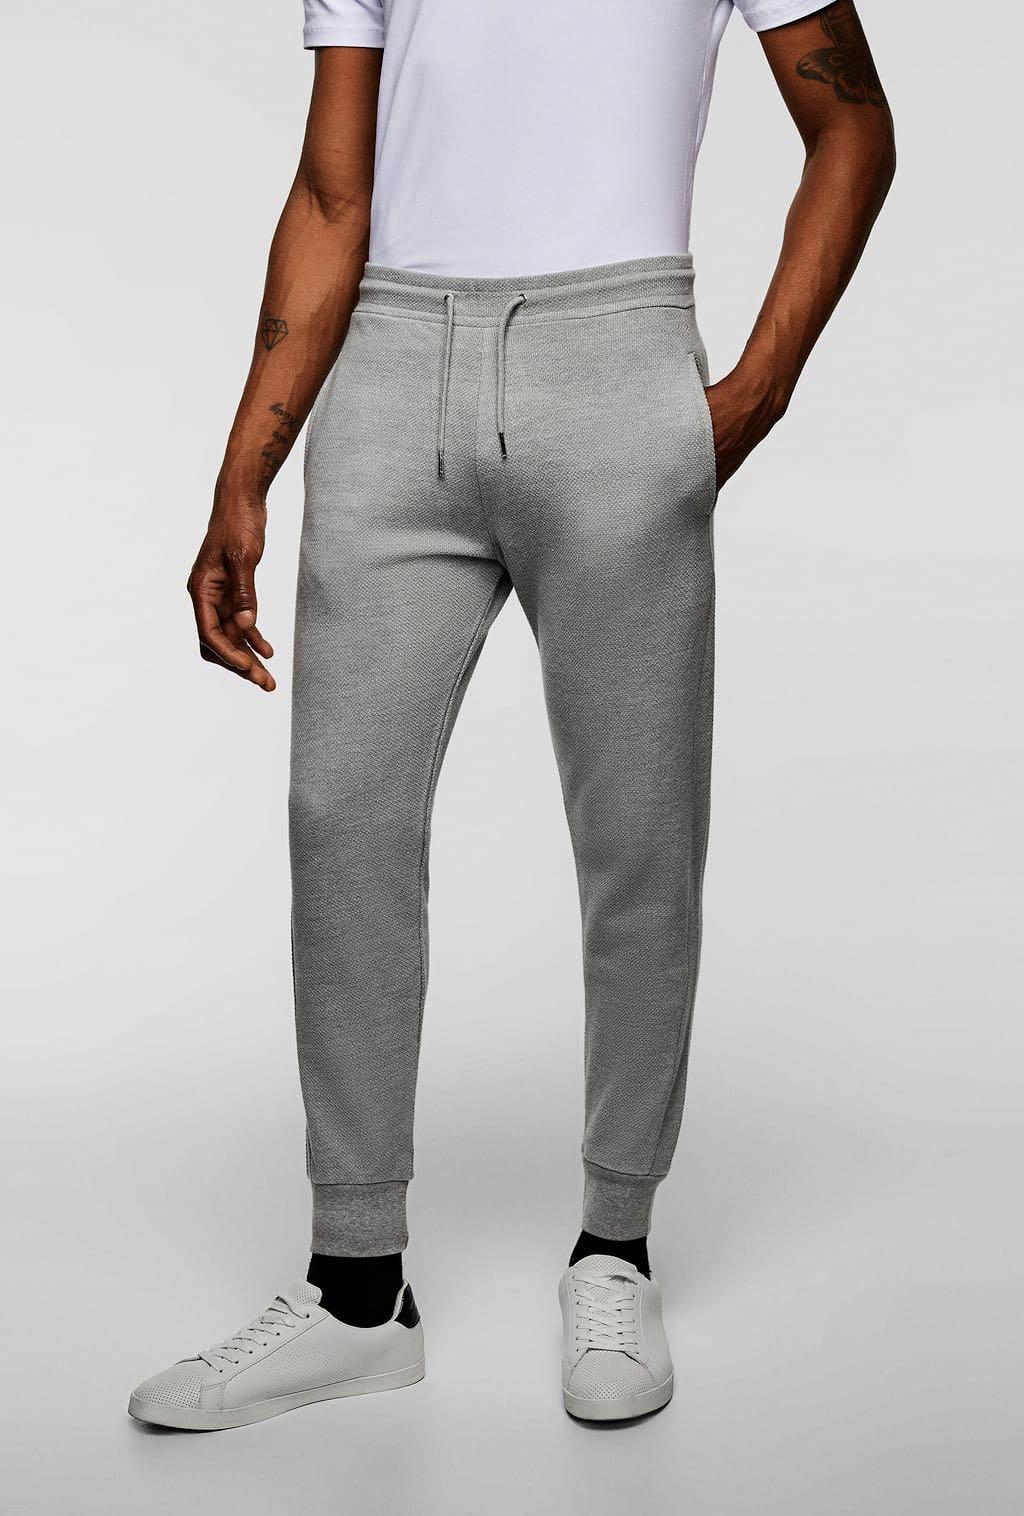 Men's Grey Sweatpants [Zara], Men's 